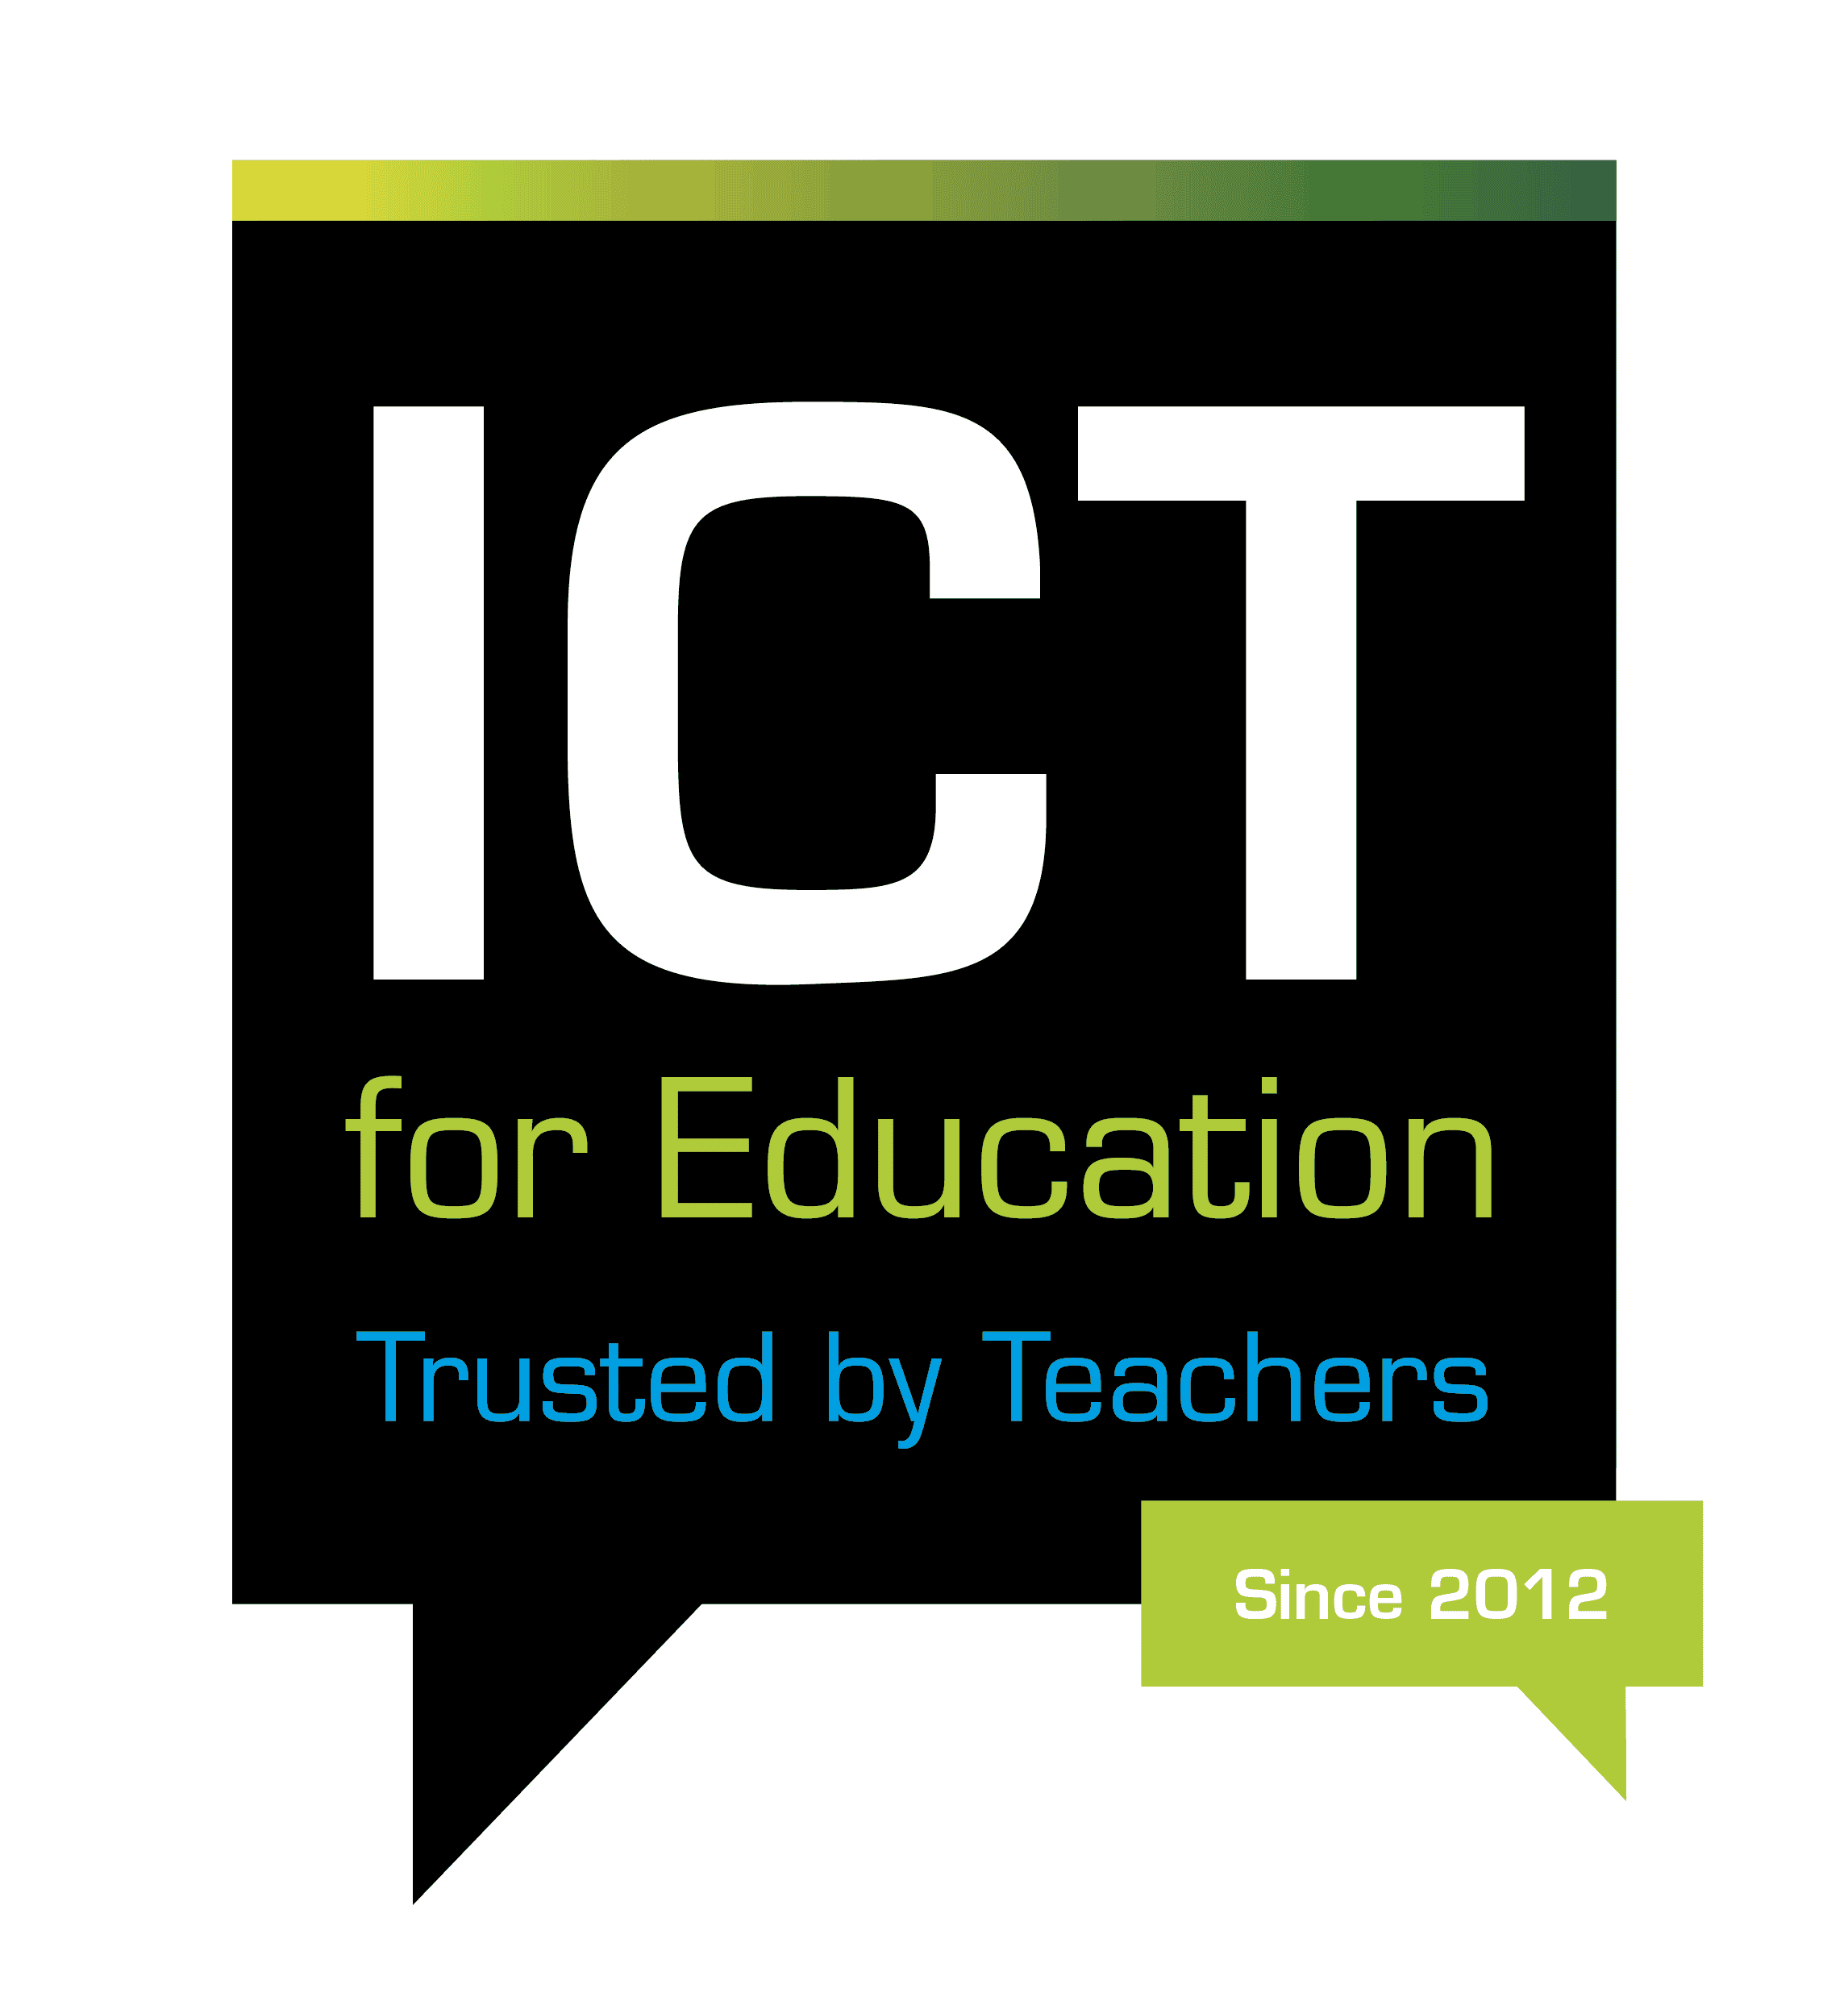 ICT for Education Logo 2020